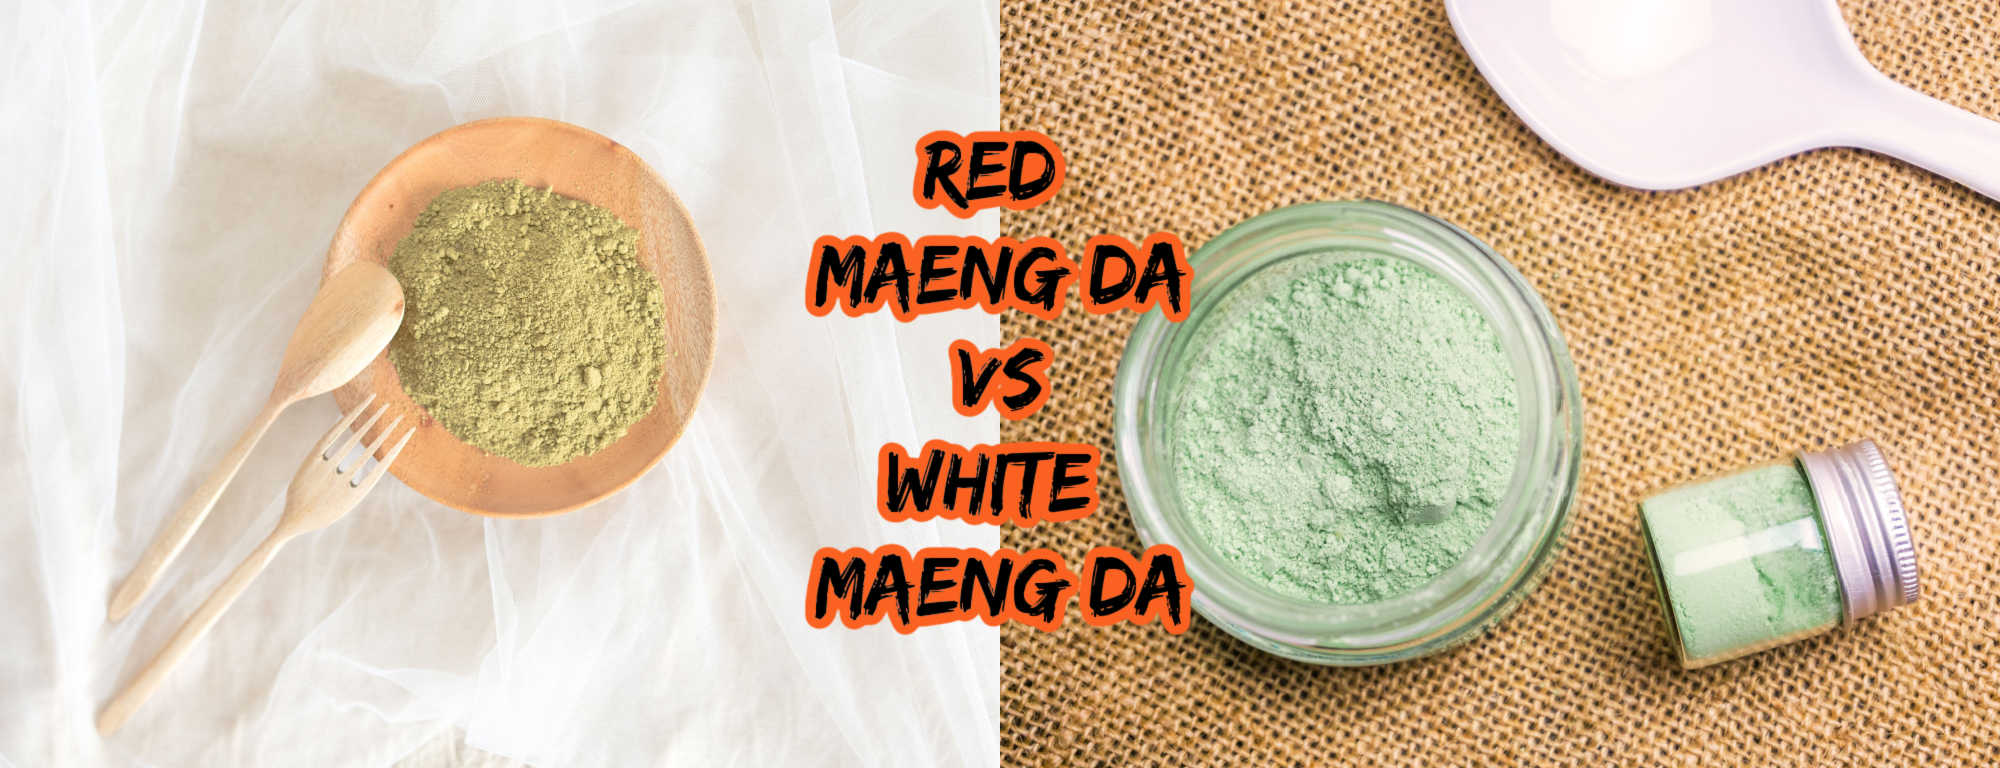 image of red maeng da vs white maeng da